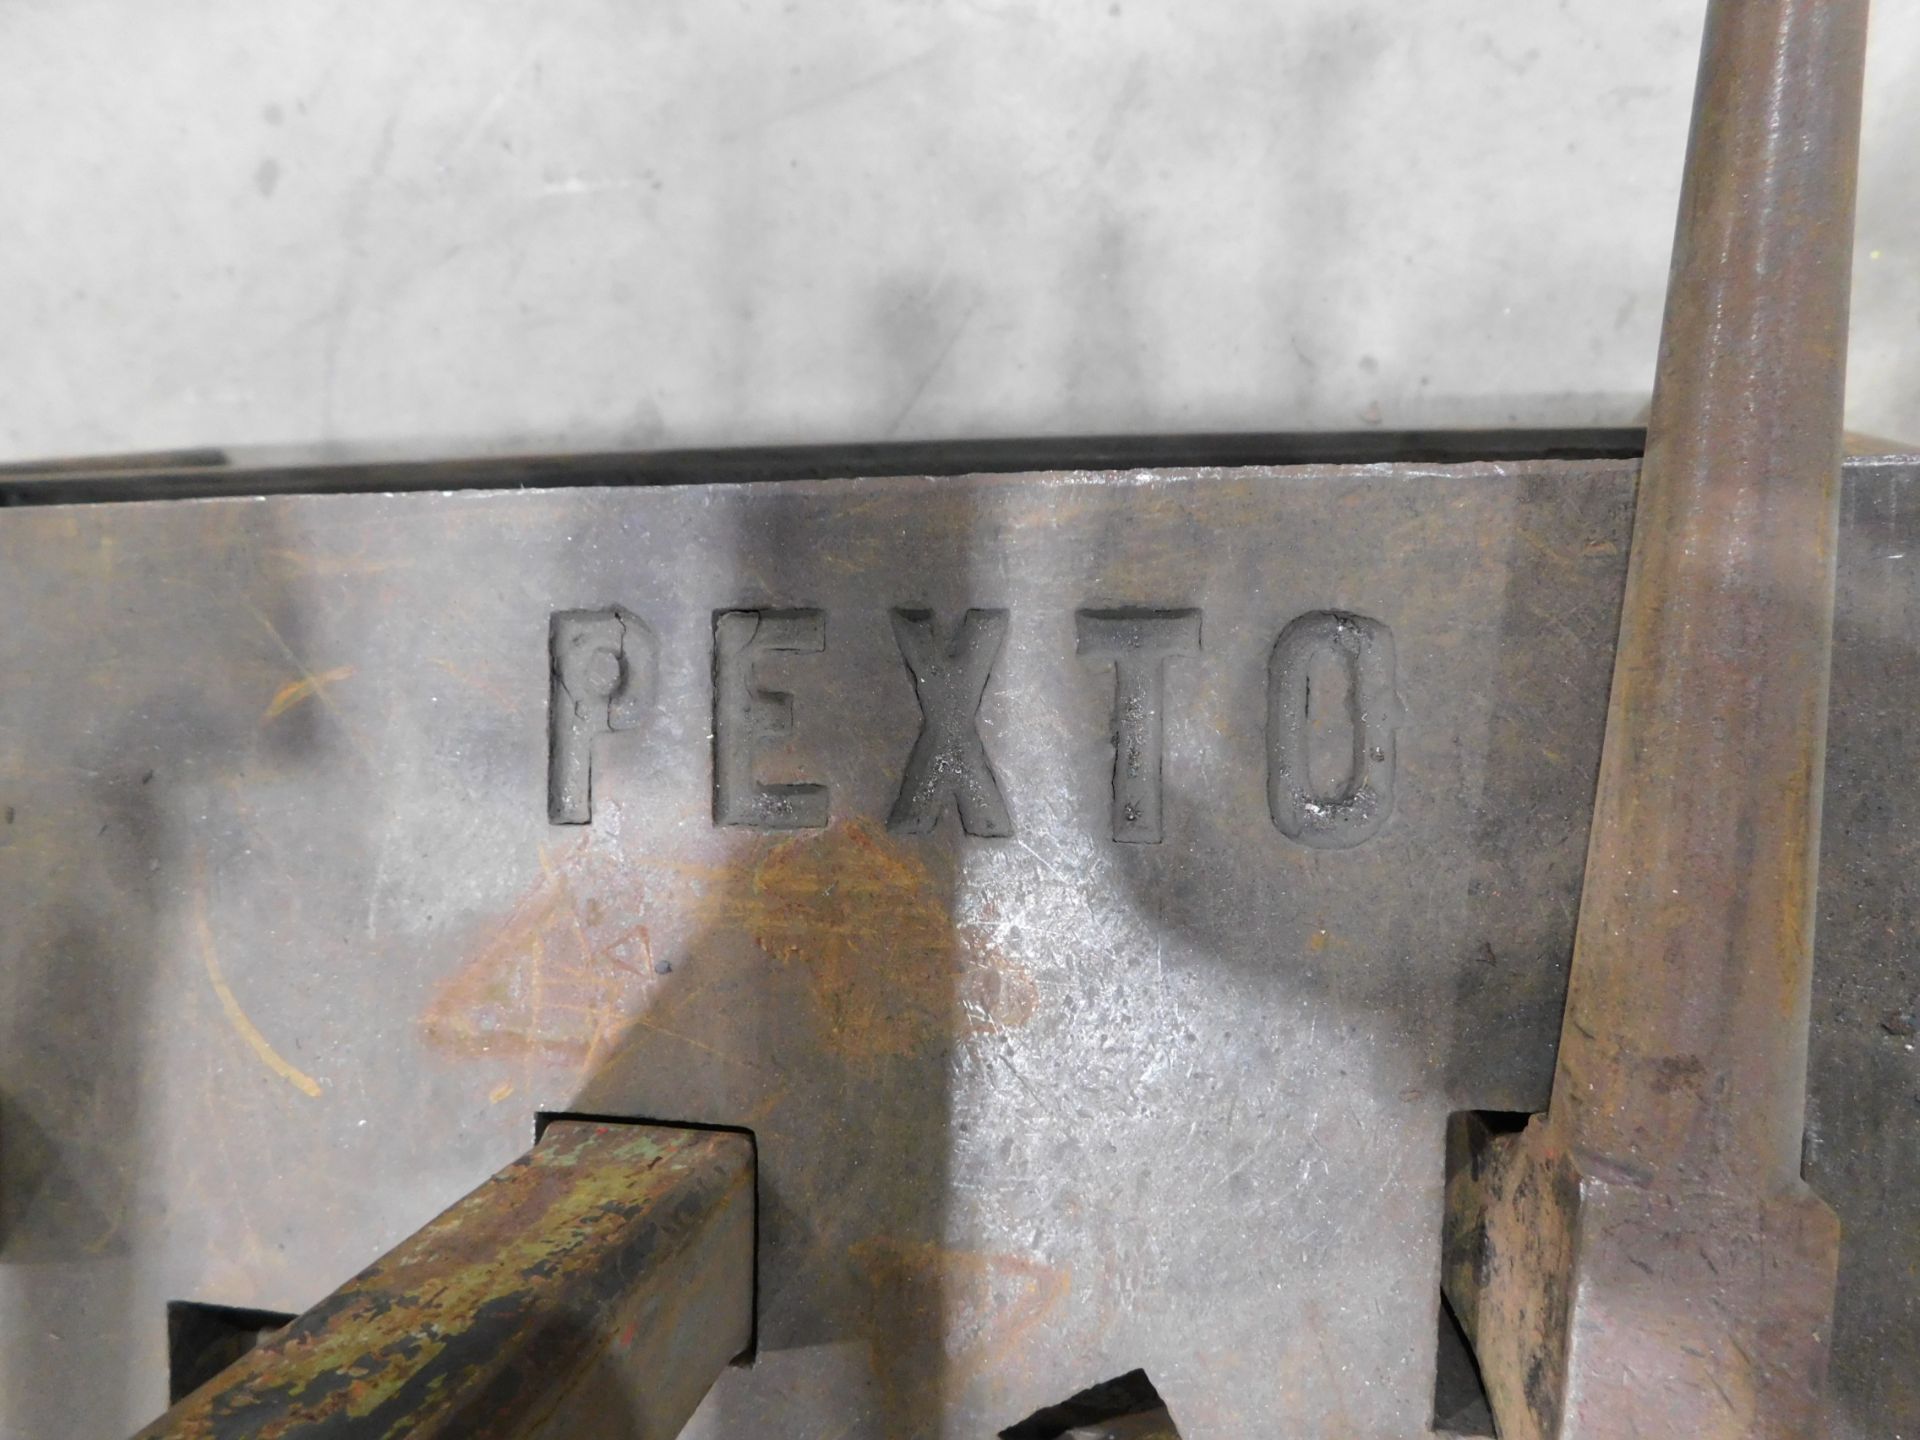 Pexto Metal Fabricators Bench with Blacksmith Tools - Image 5 of 6